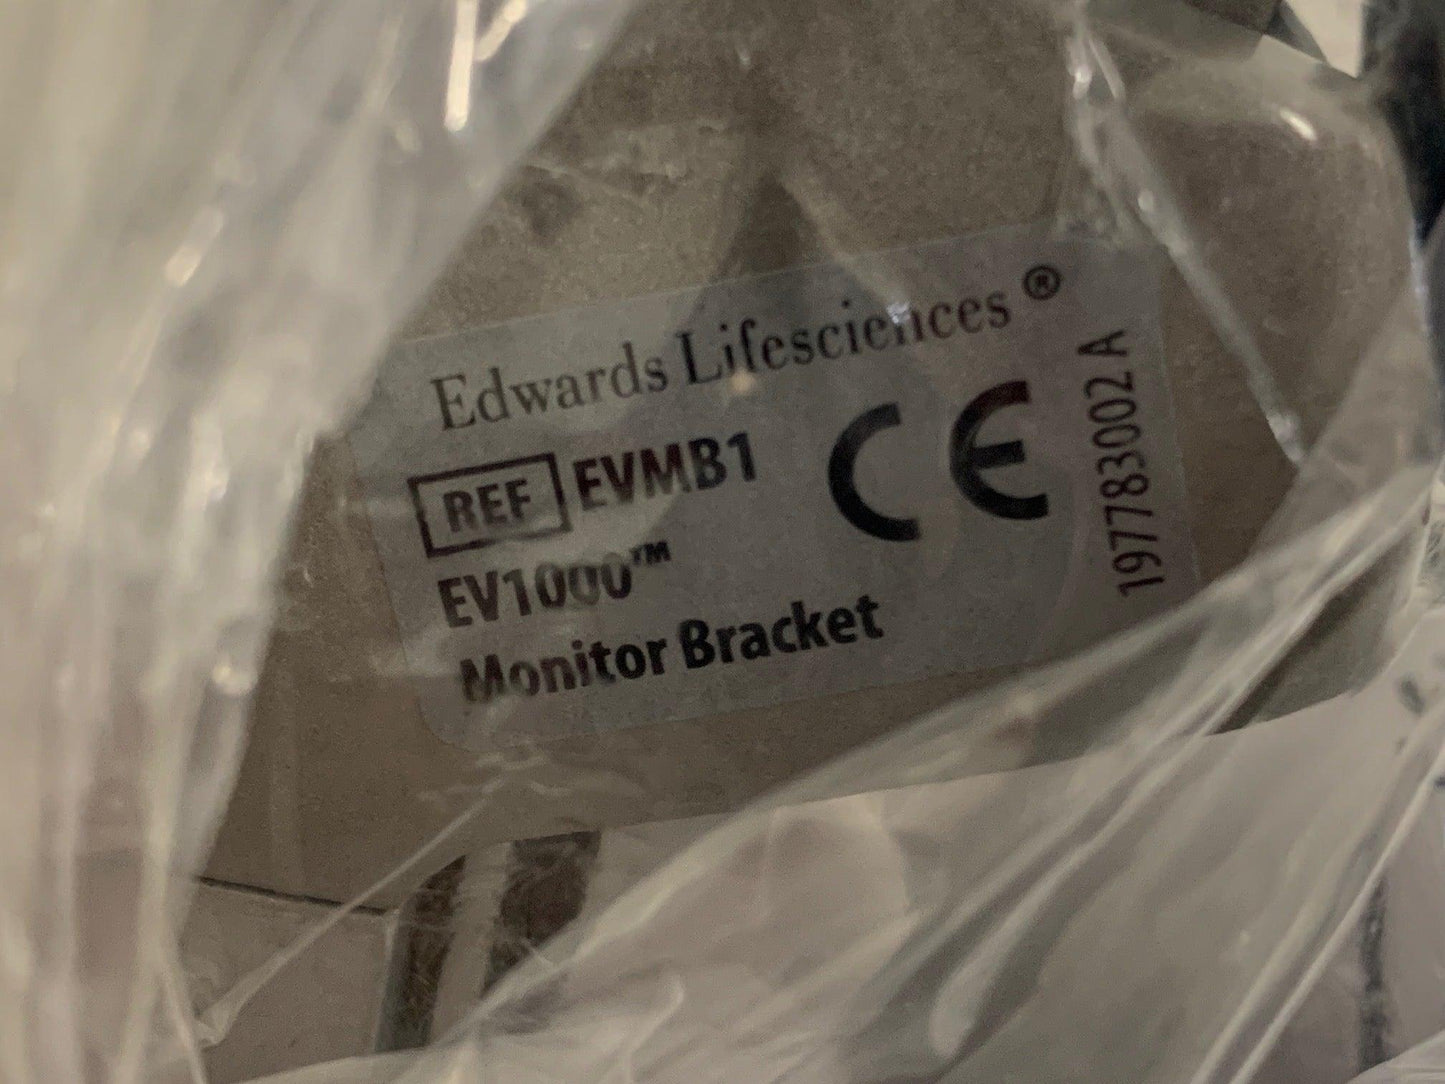 NEW Open Box Edwards Lifesciences EV1000 Monitor EV1000M with Brackets EVMB1